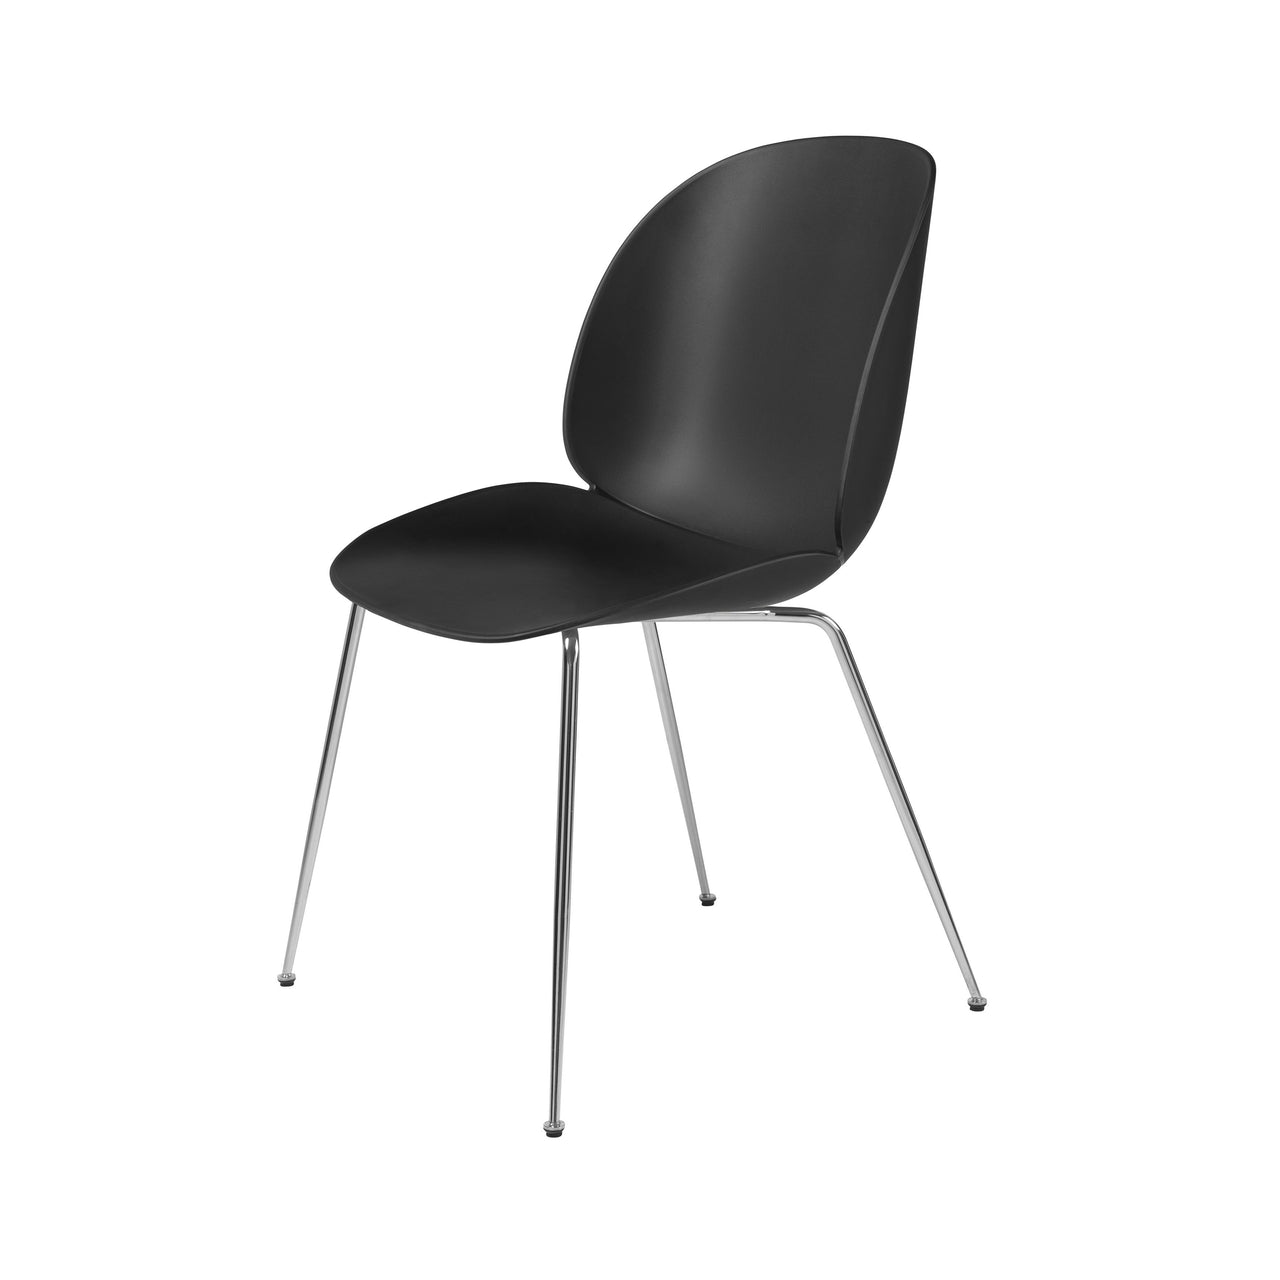 Beetle Dining Chair: Conic Base + Black + Chrome + Felt Glides